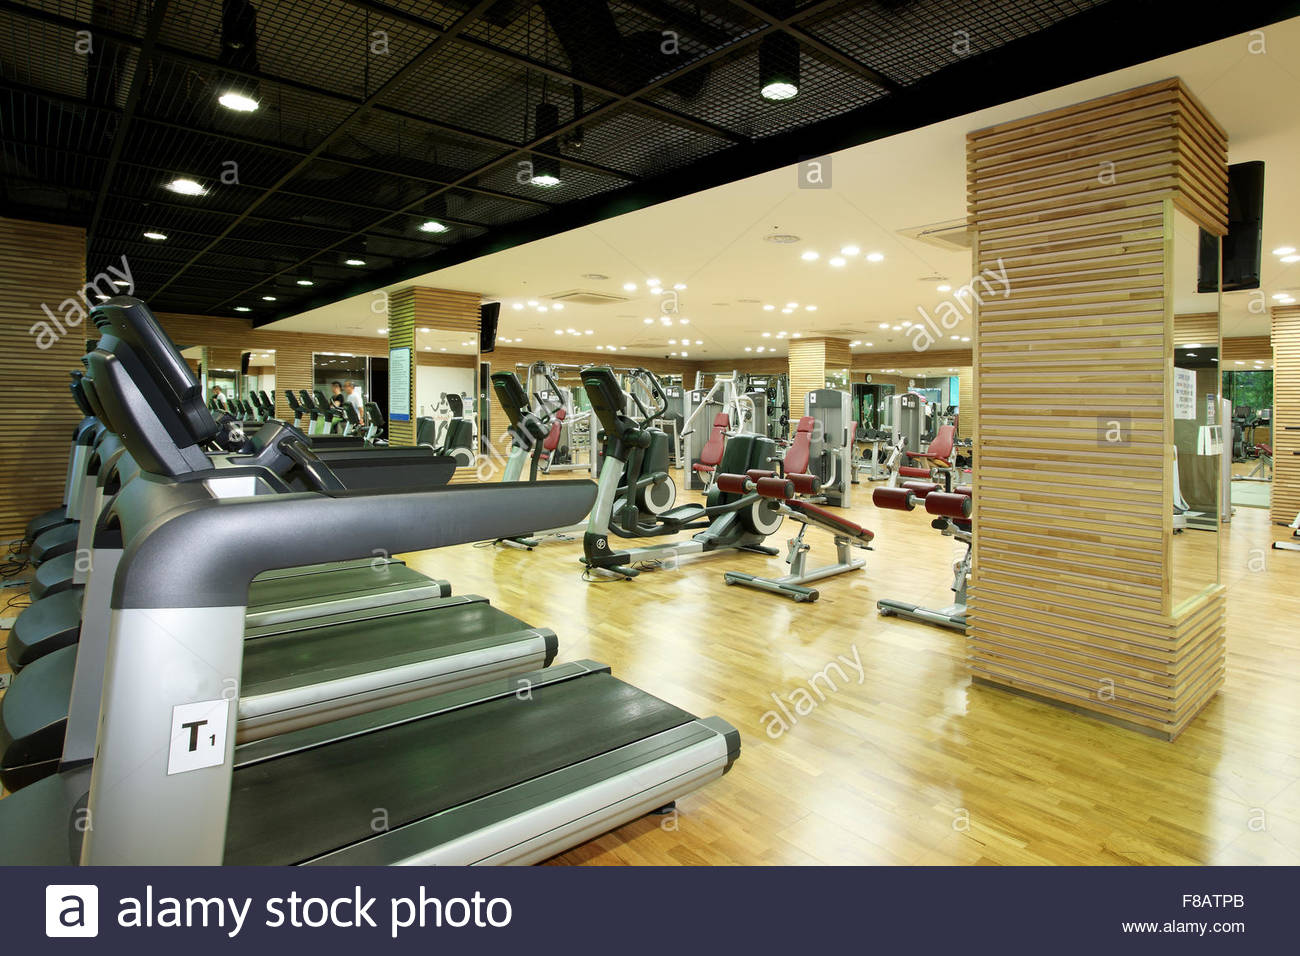 fitness center Stock Photo, Royalty Free Image: 91208051 - Alamy